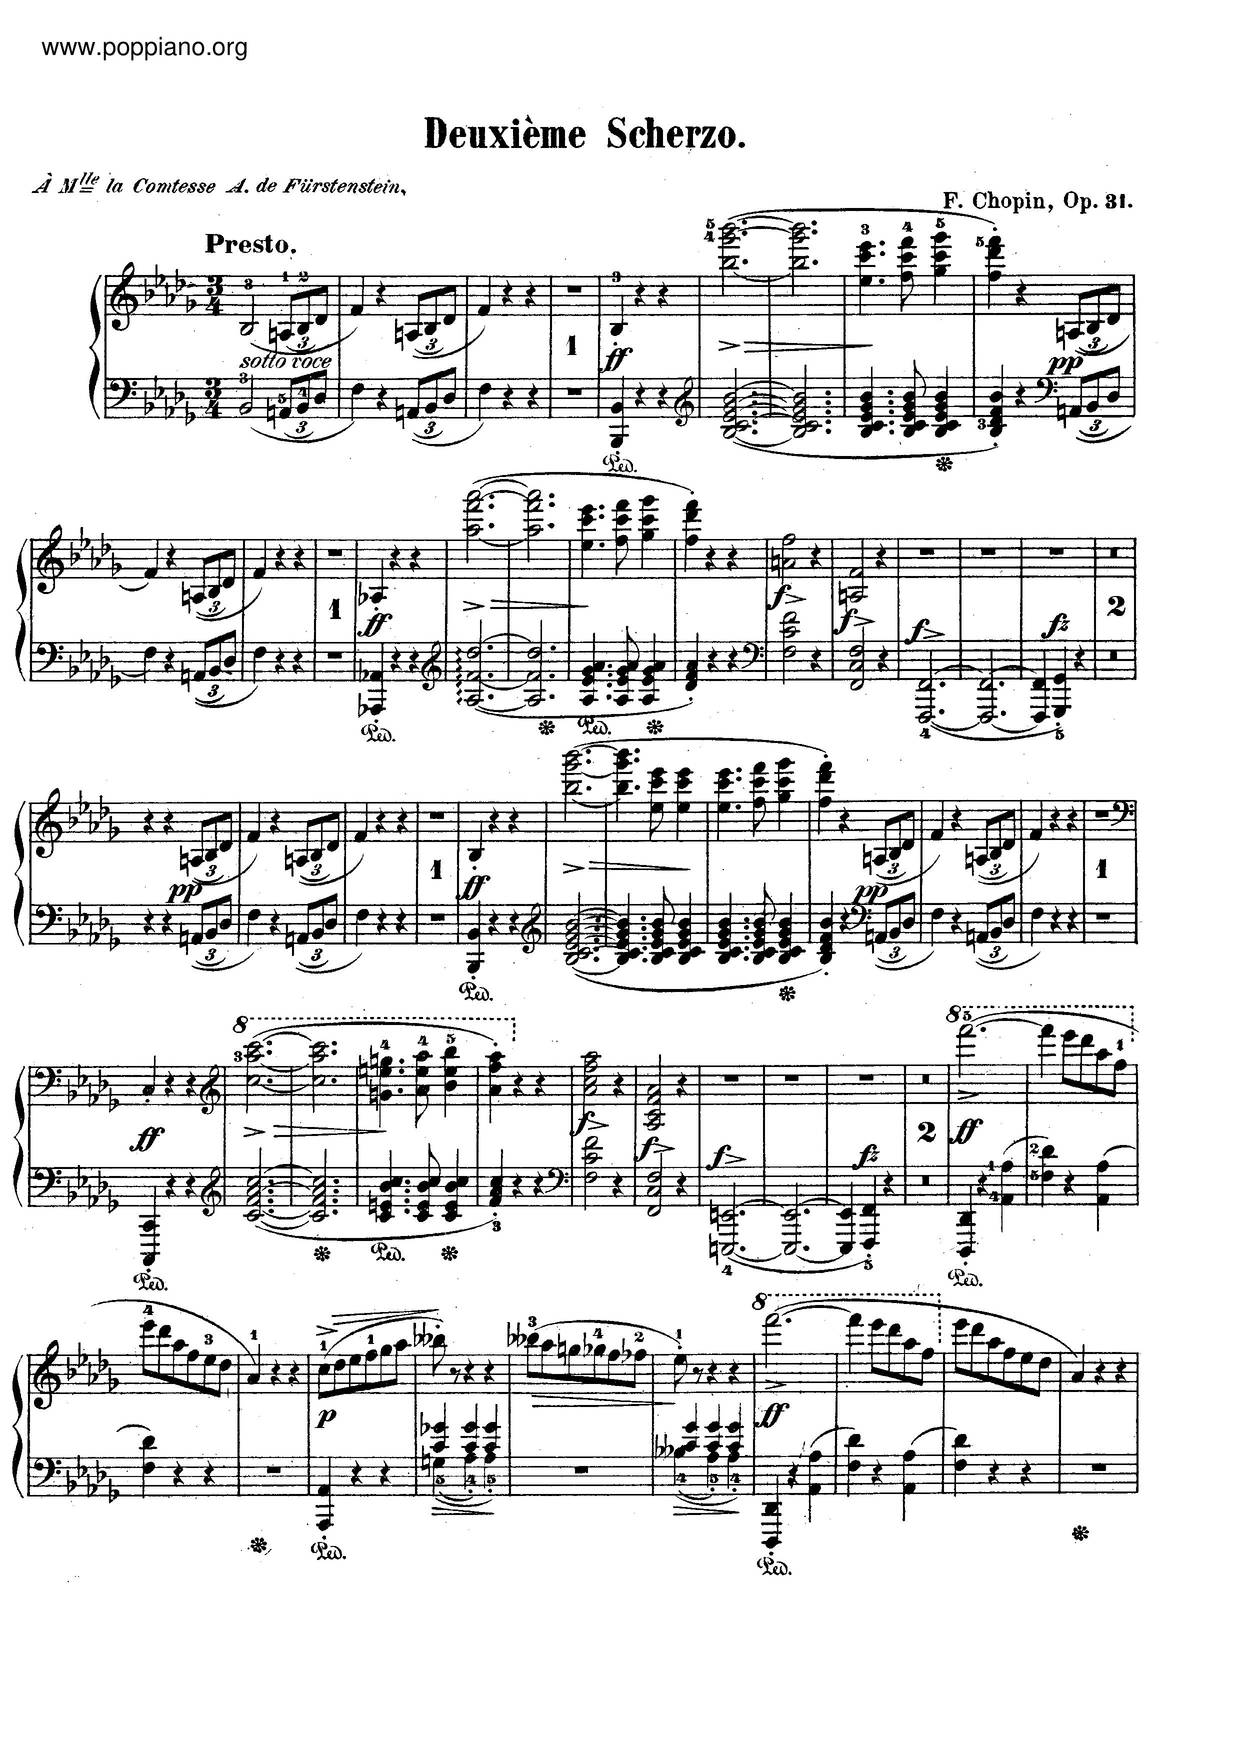 Scherzo No. 2 In B-Flat Minor, Op. 31 Score